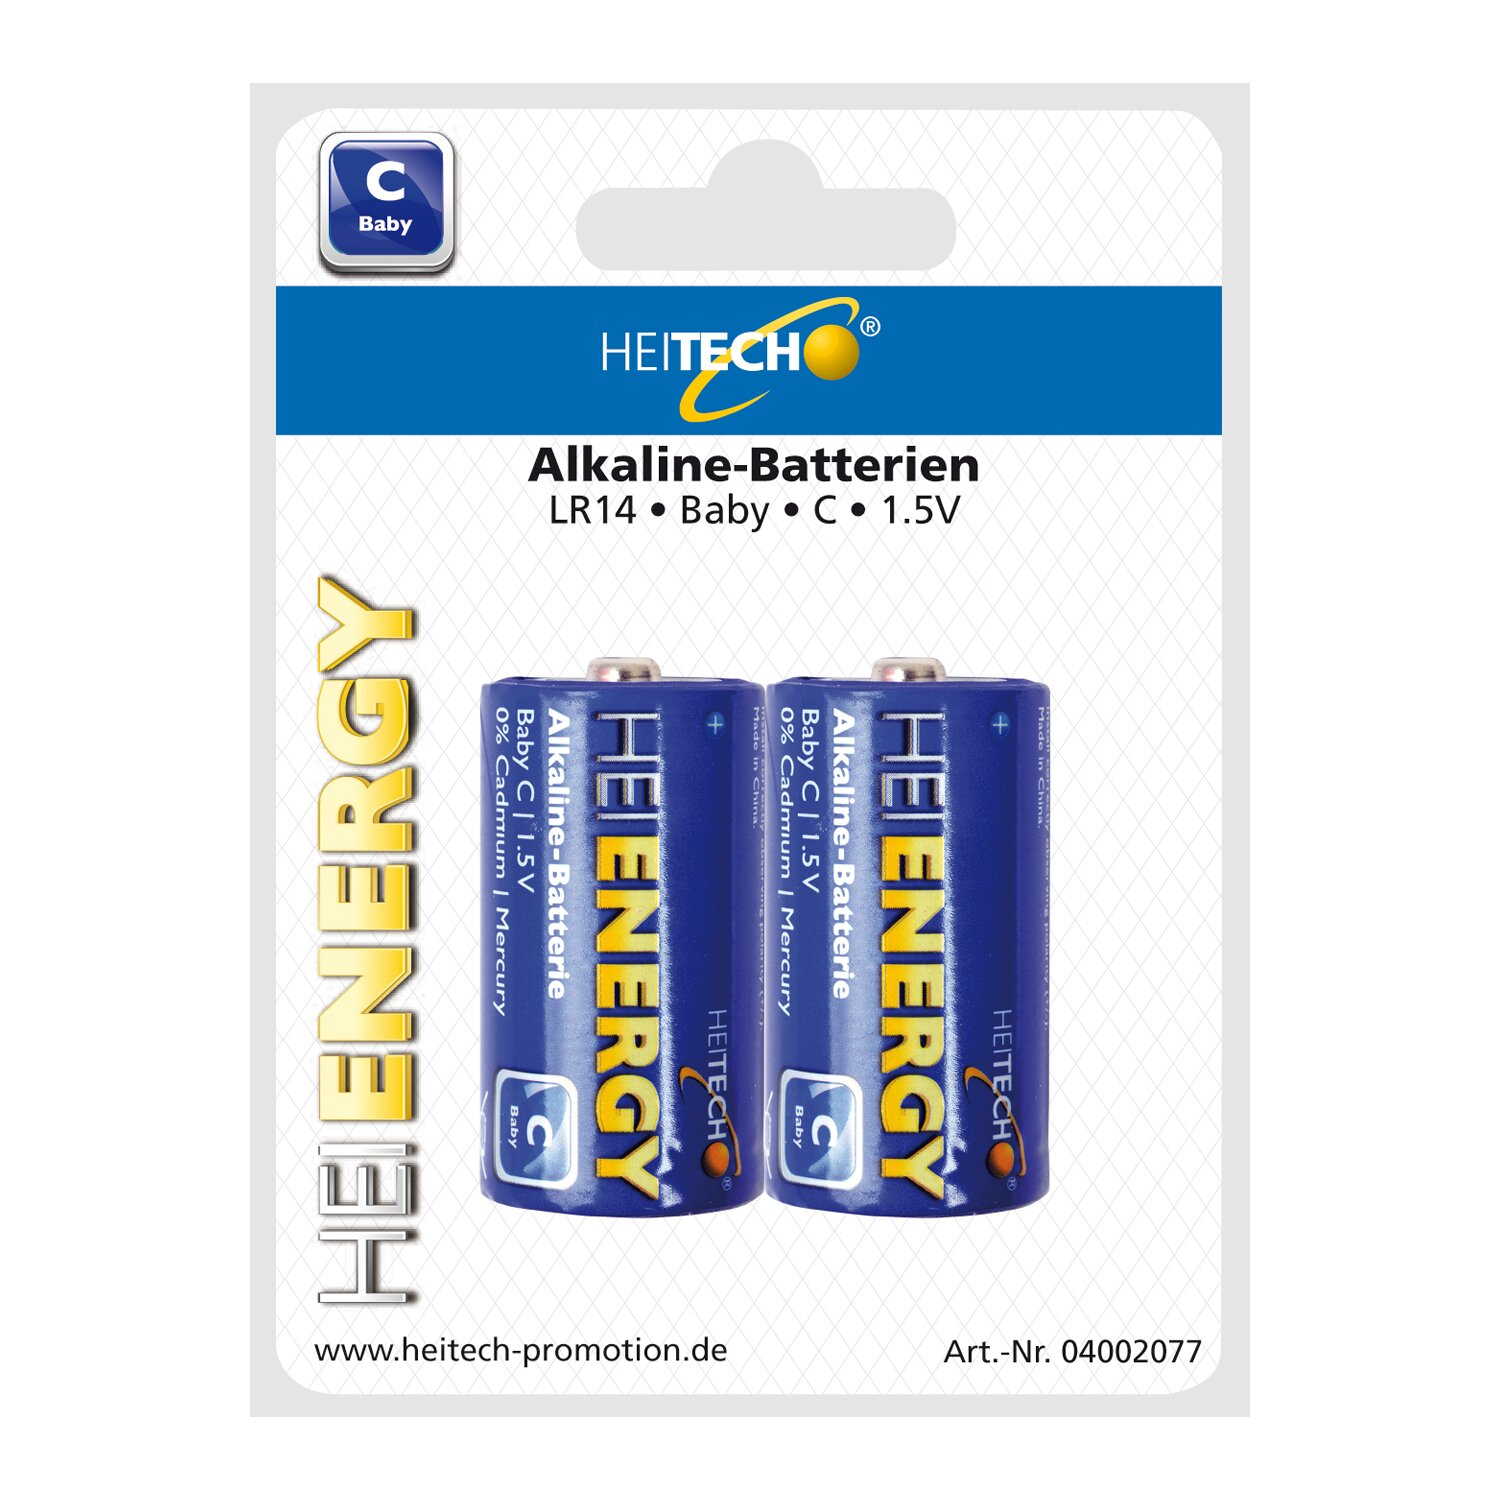 HEITECH 2-er Alkaline Baby Pack C Batterie